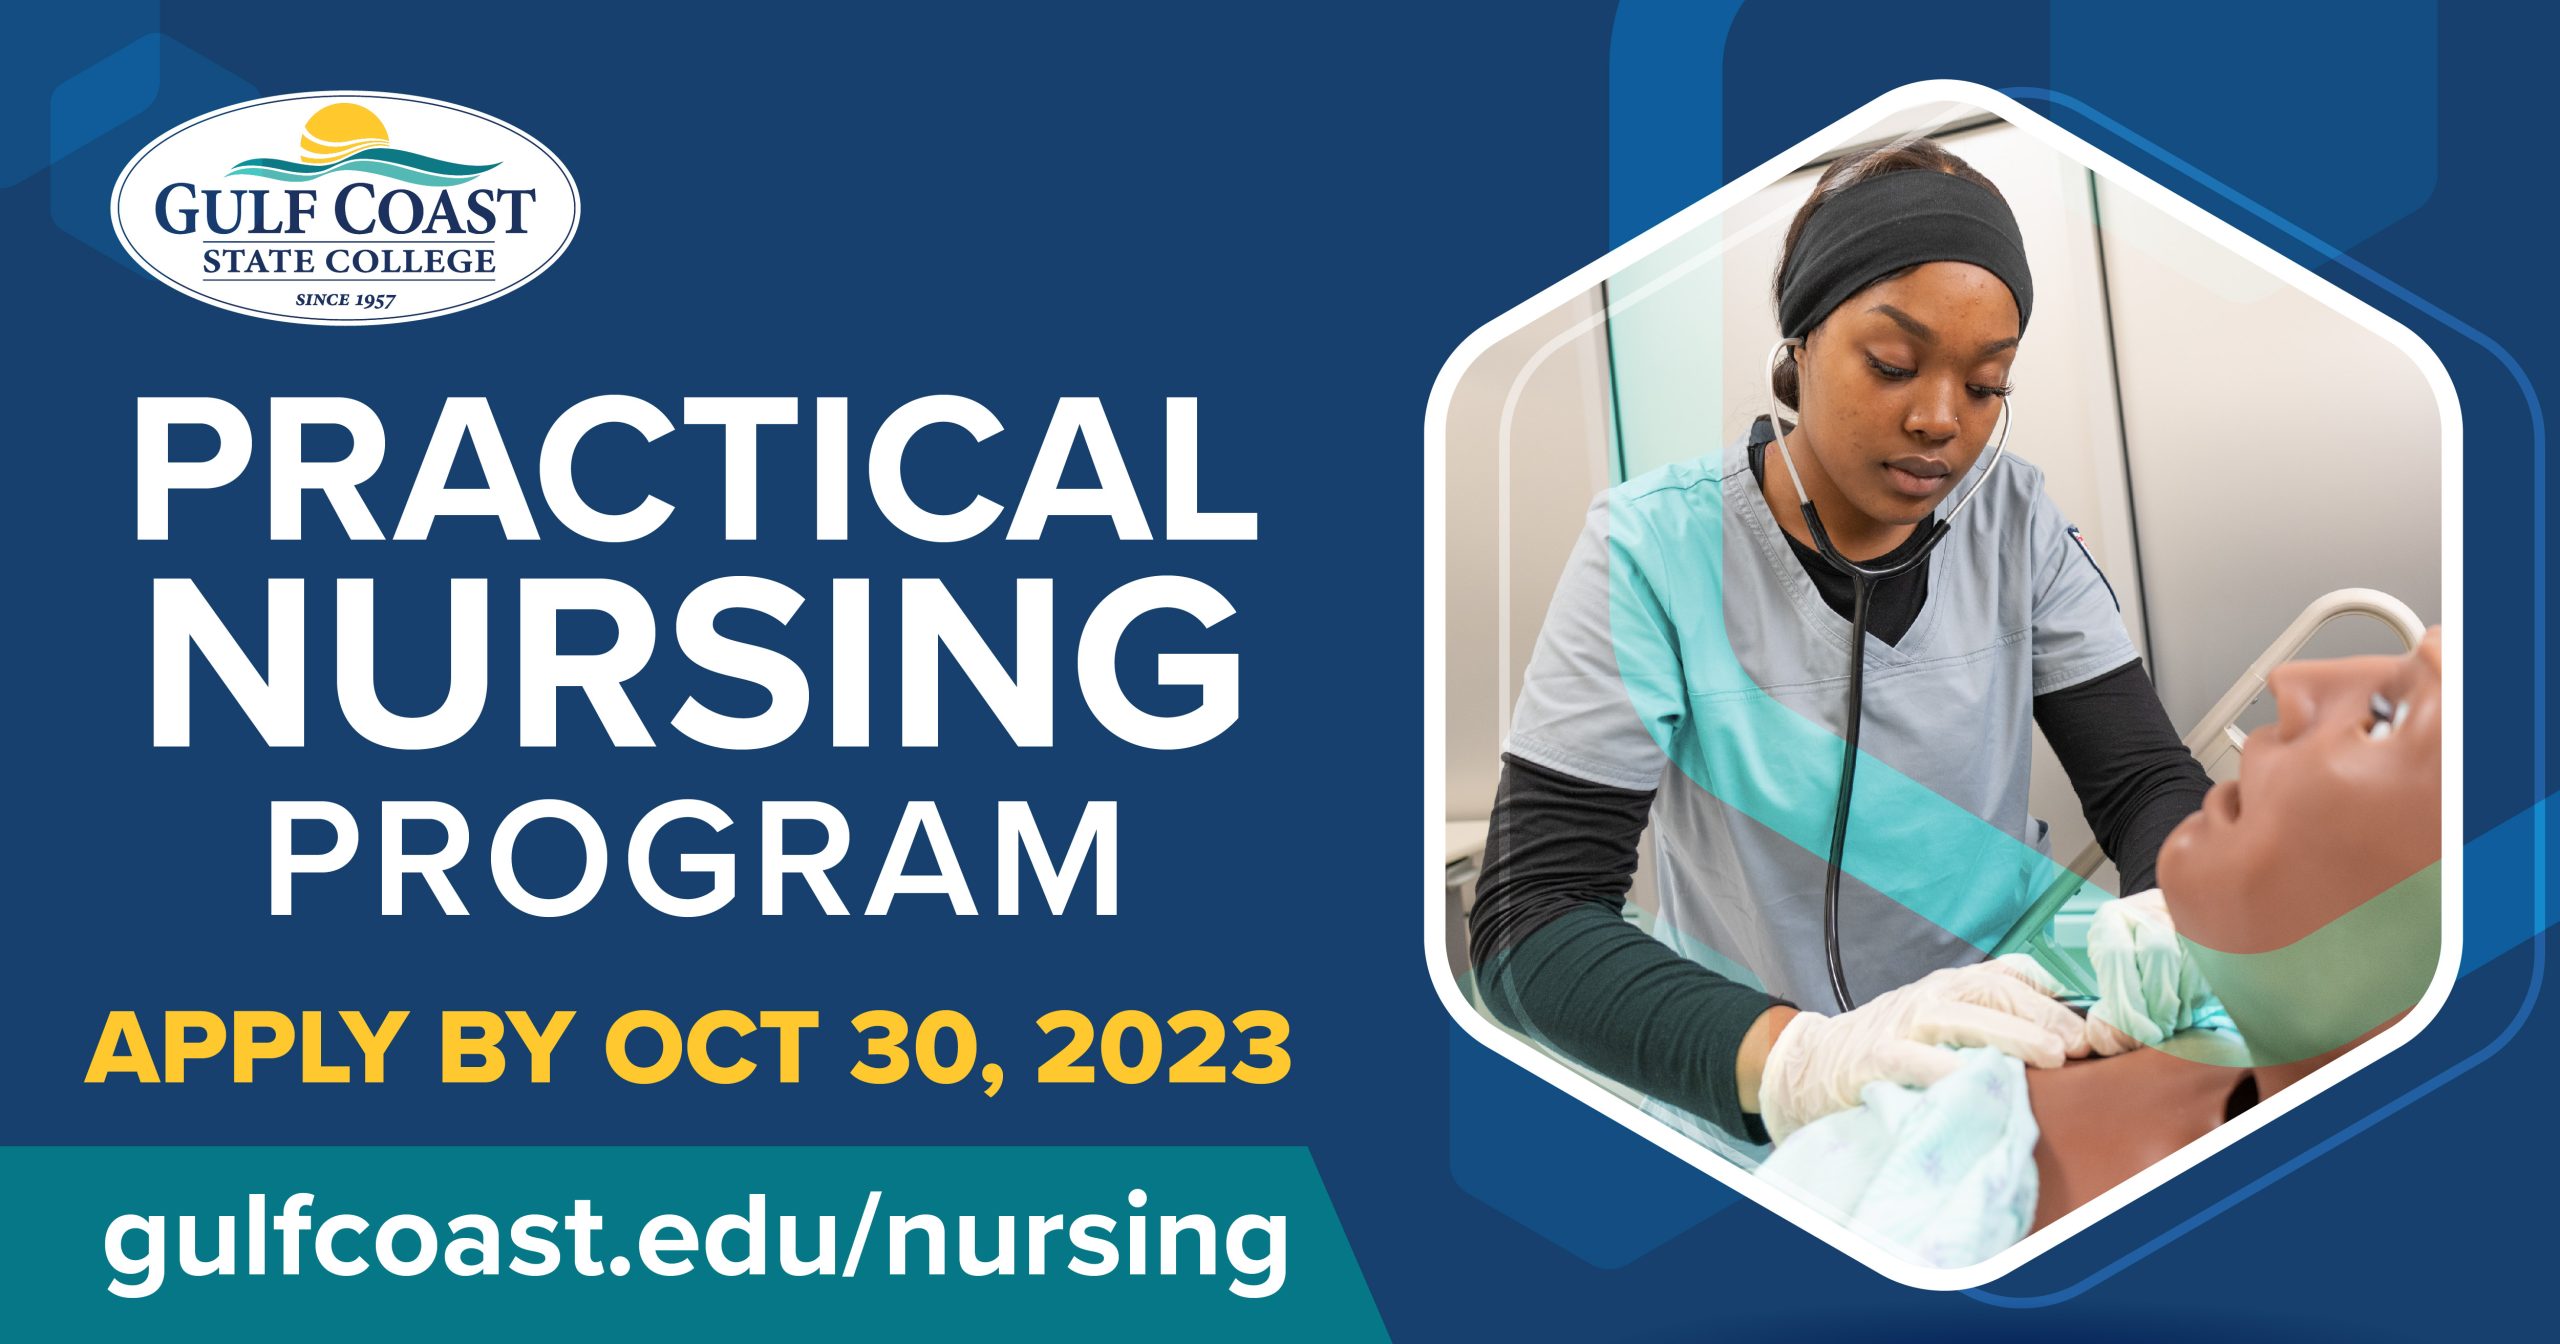 GCSC Licensed Practical Nursing (LPN) Program Accepting